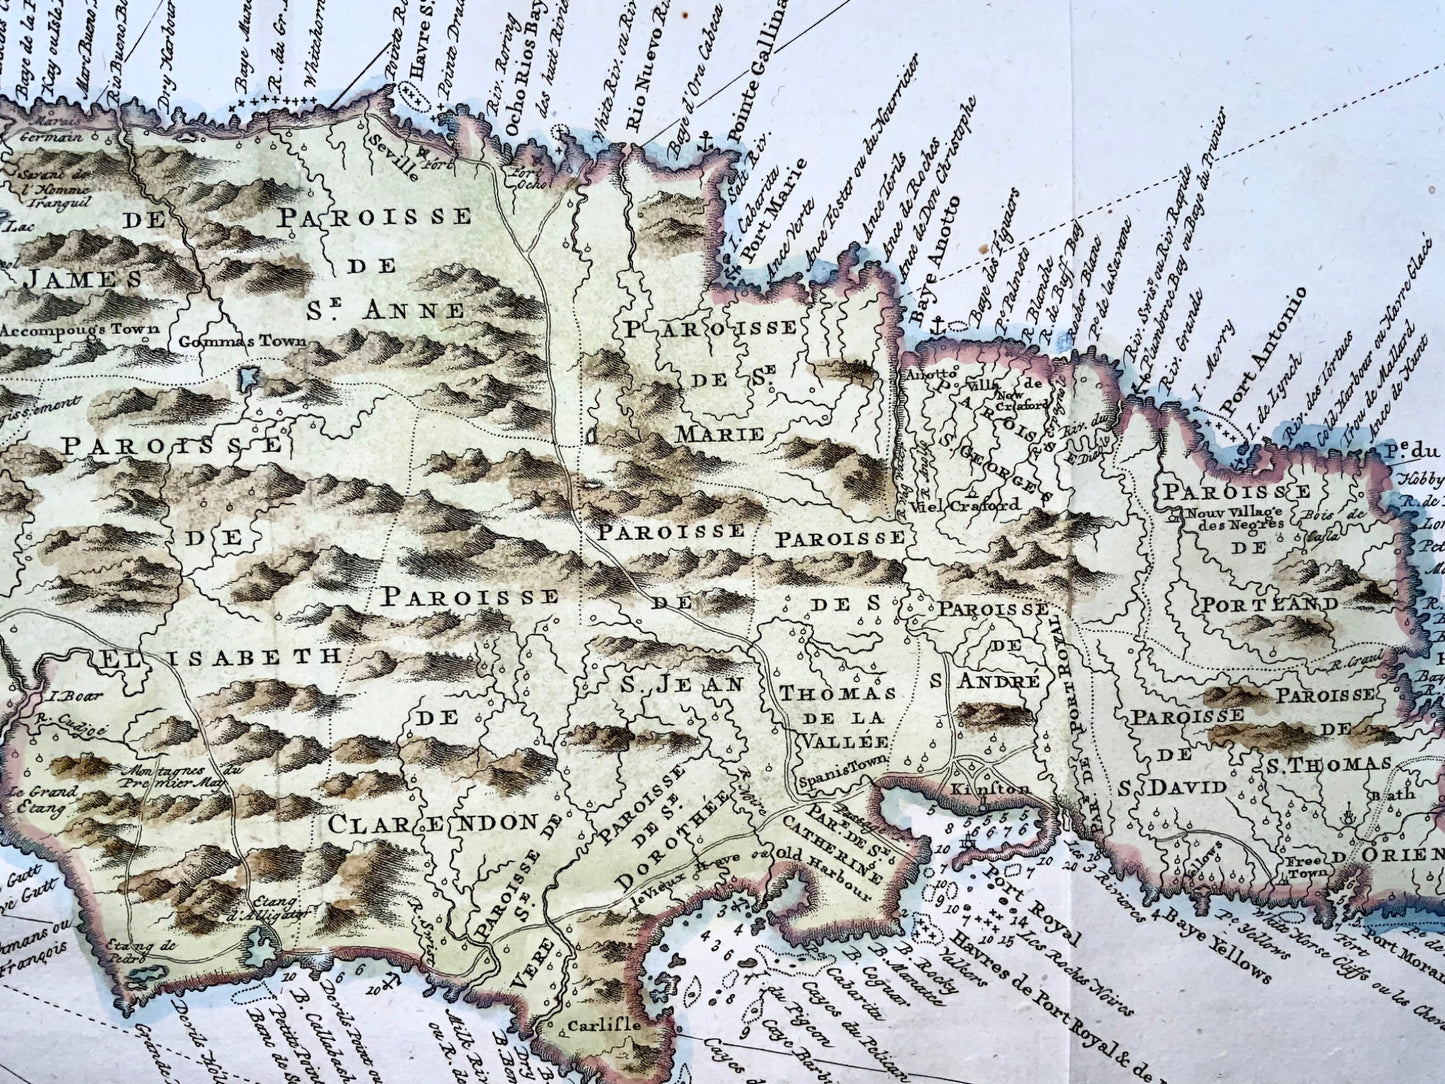 1776 A. Krevelt, Bellin, Carte de Jamaïque, Jamaïque Caraïbes, carte colorée à la main